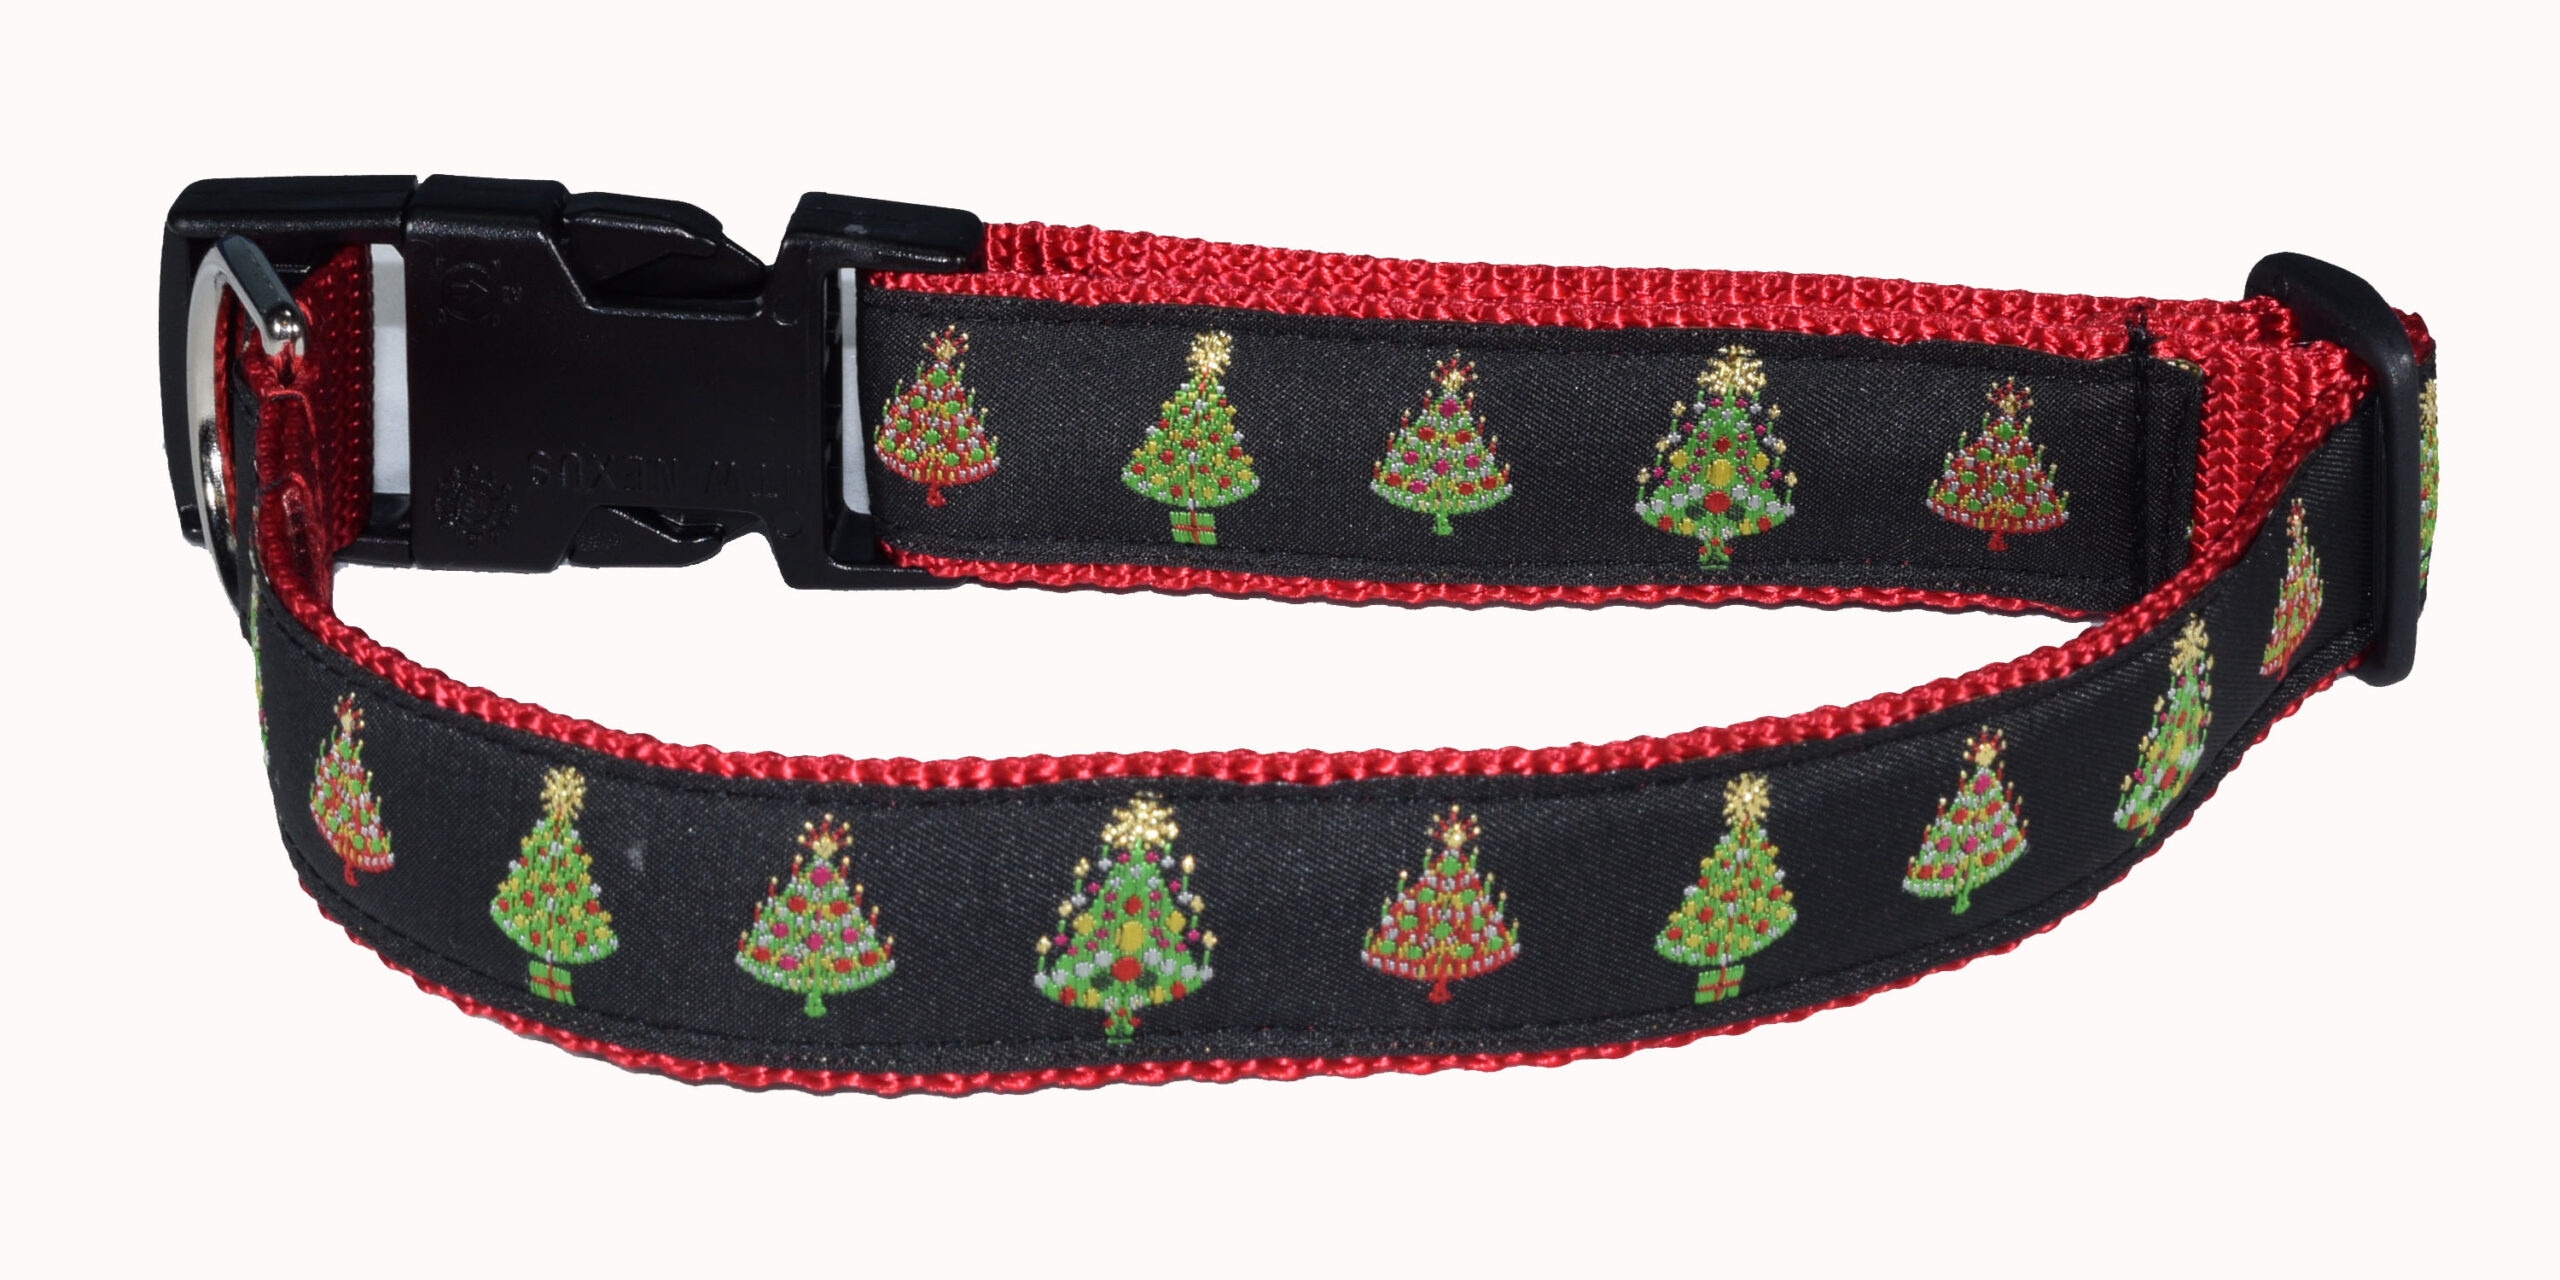 Christams Trees Wholesale Dog Collars